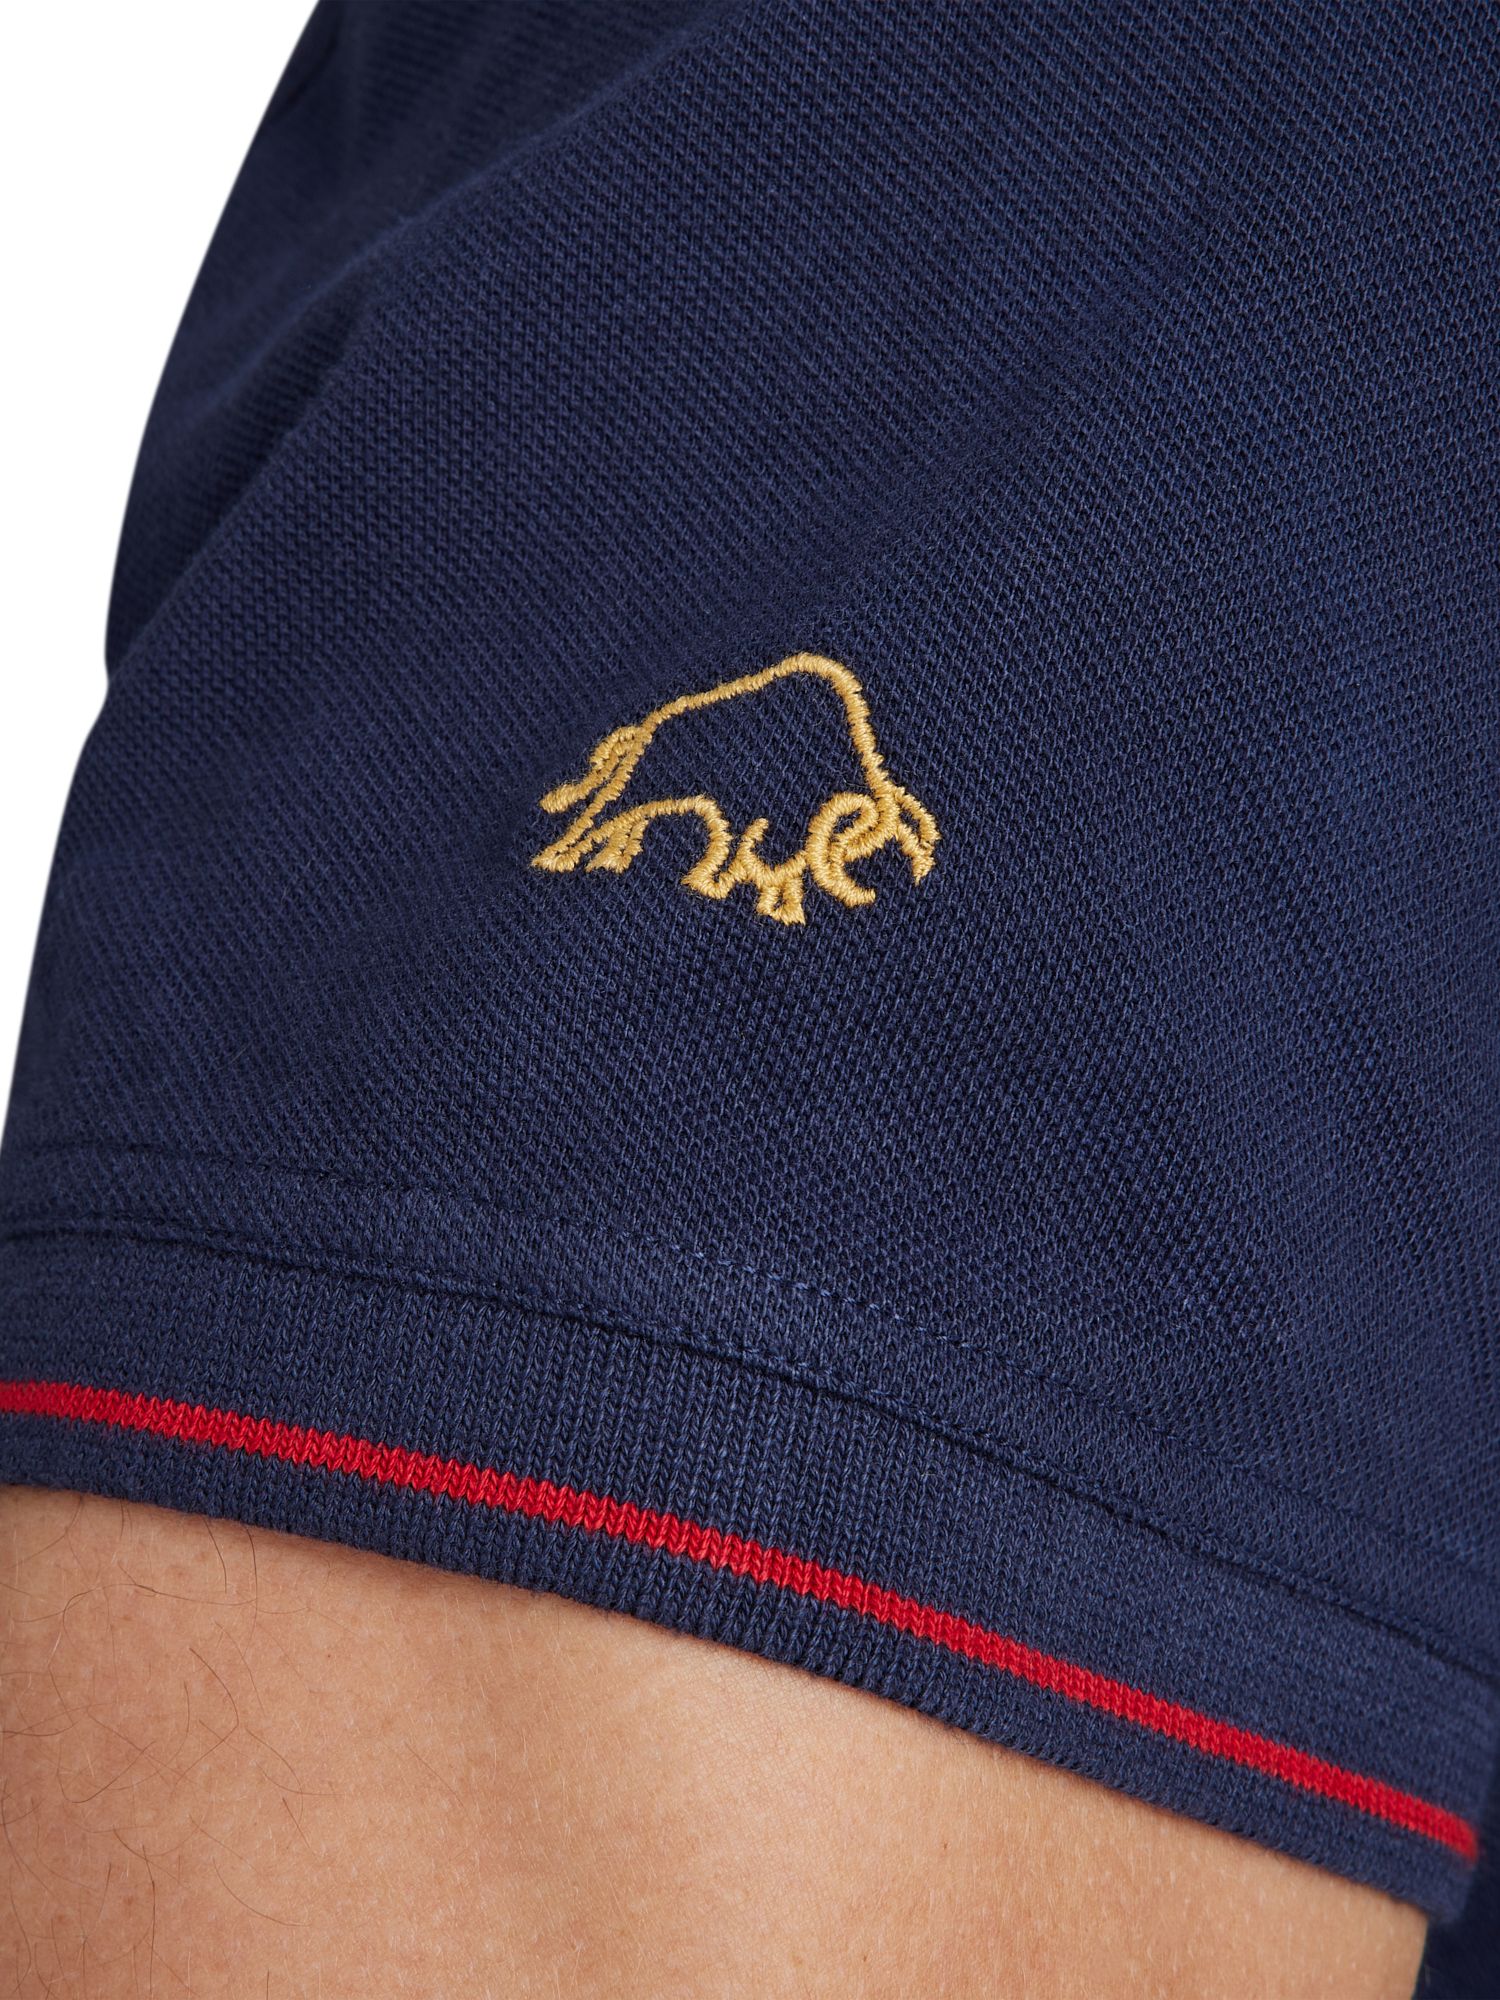 Raging Bull Stripe Pique Polo Shirt, Navy, XL